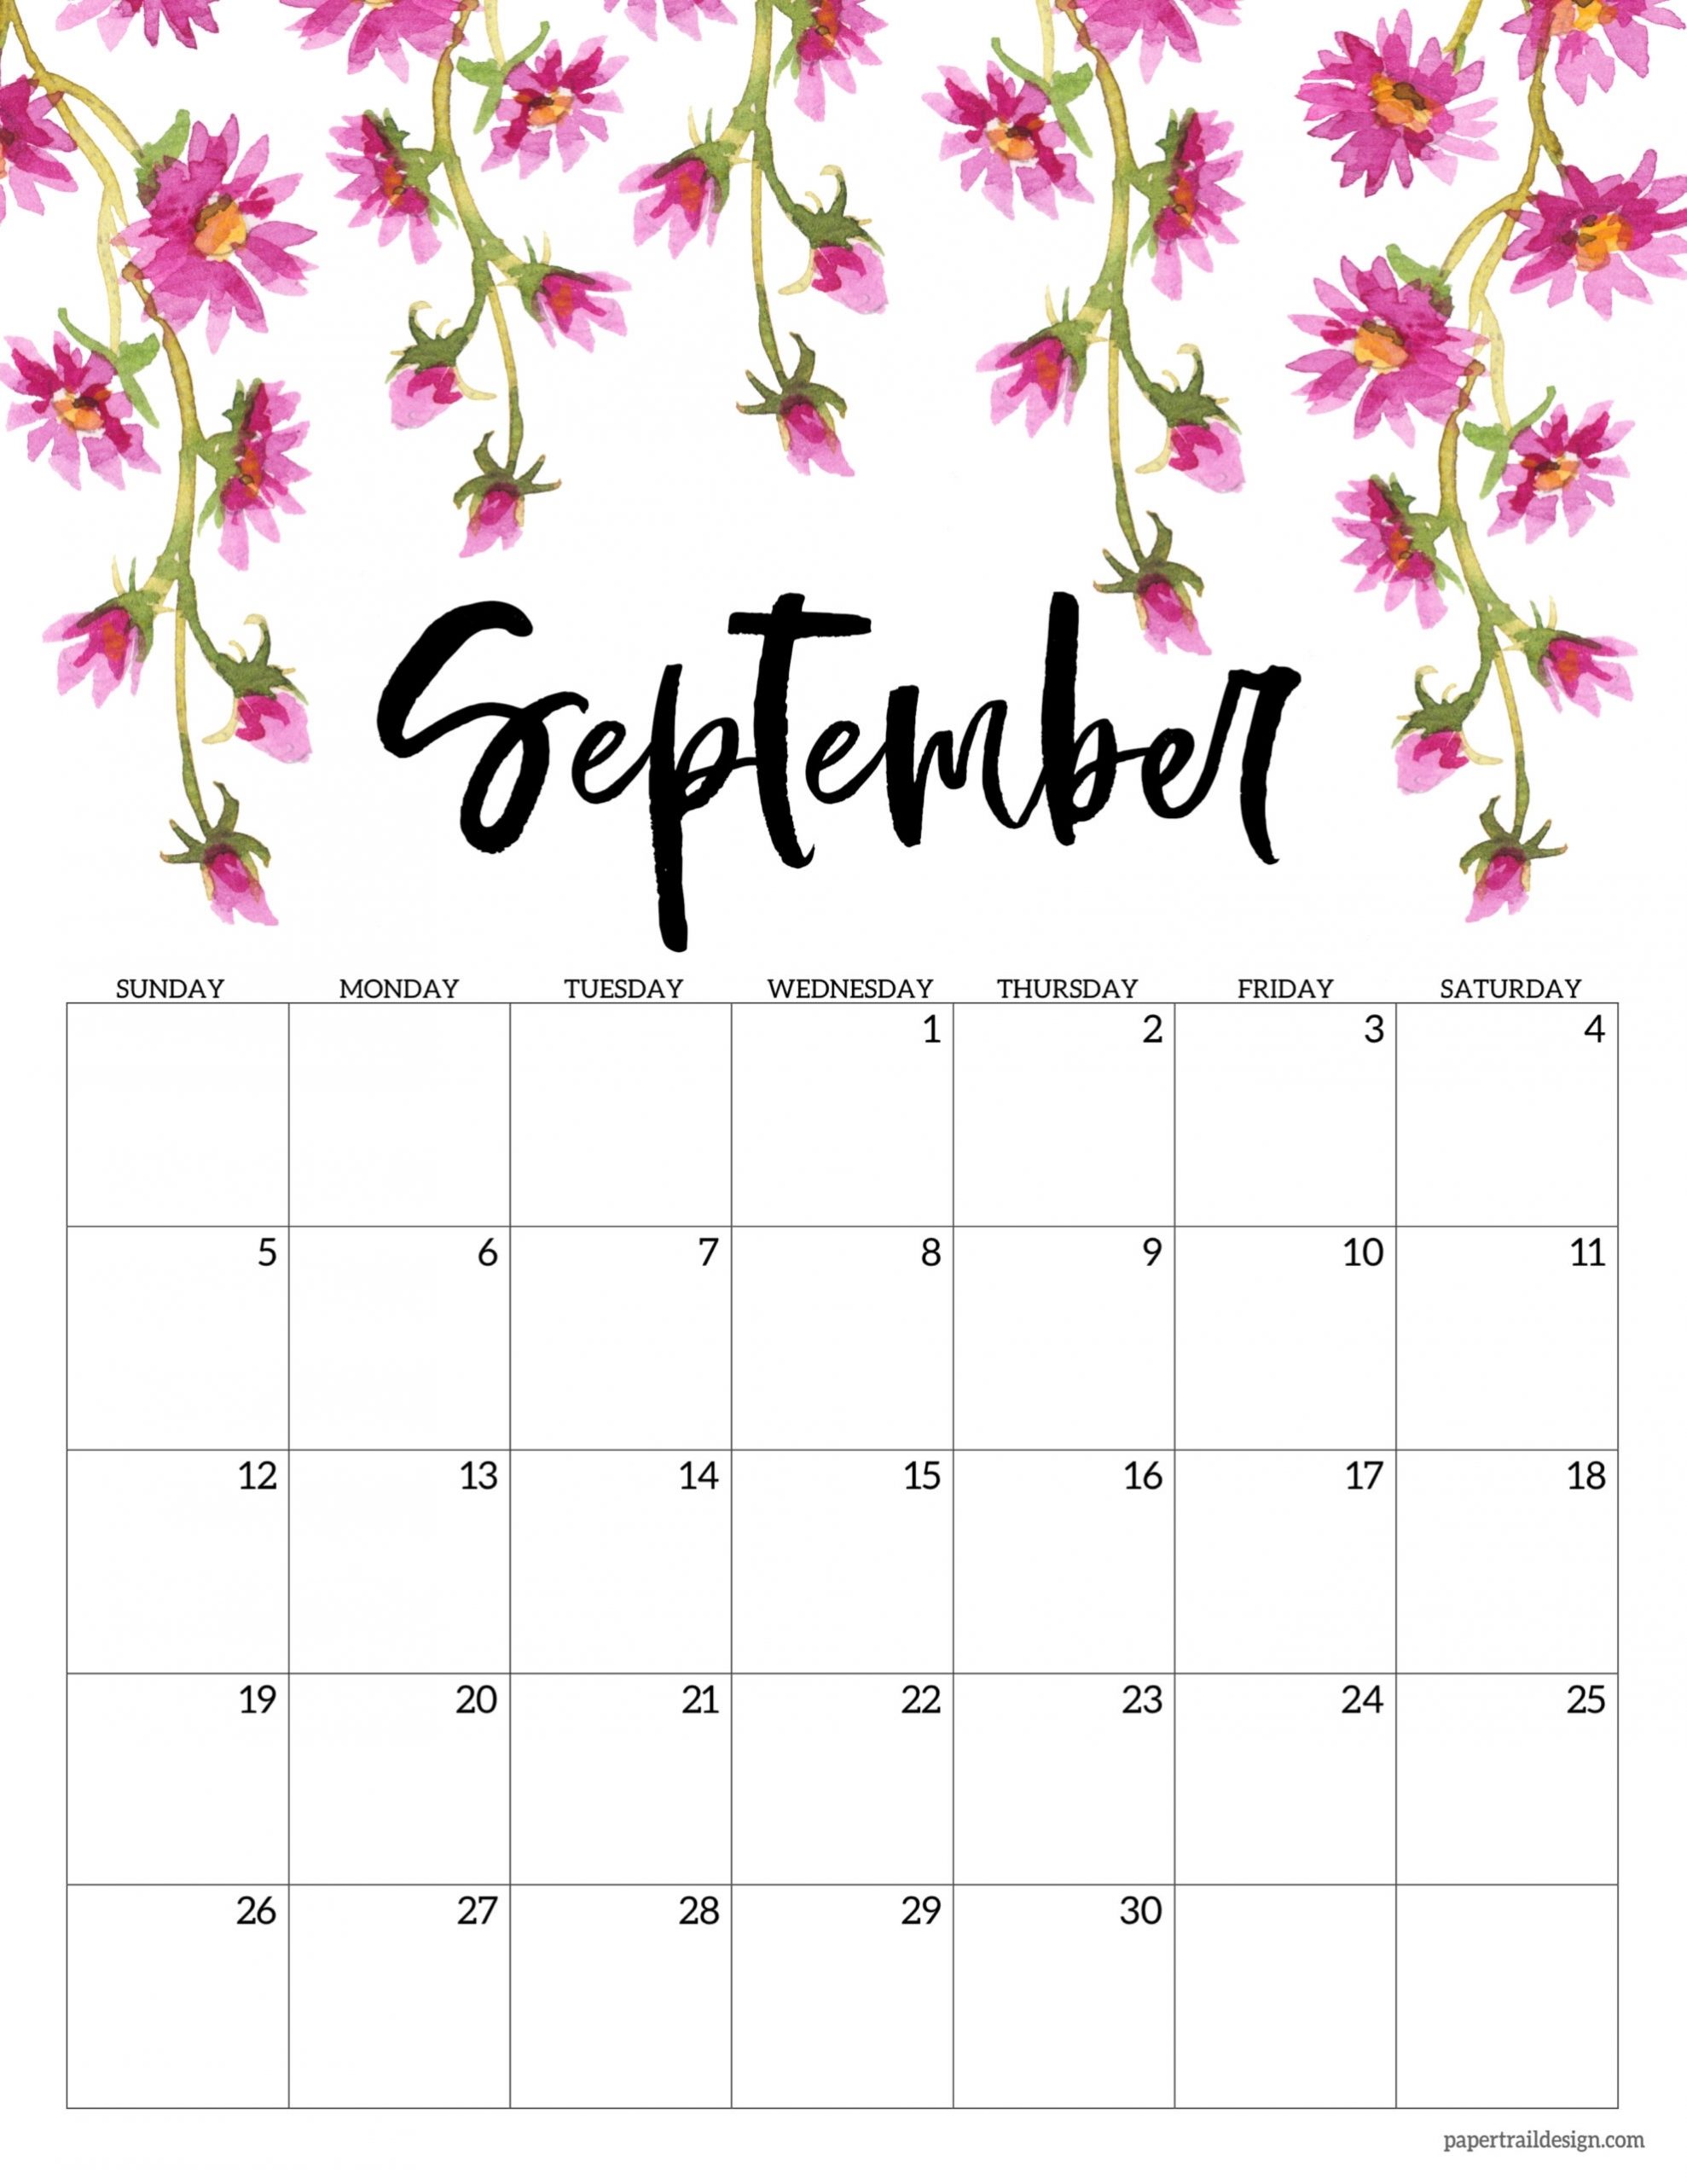 Get September Calendar 2021 Printable Free Pretty